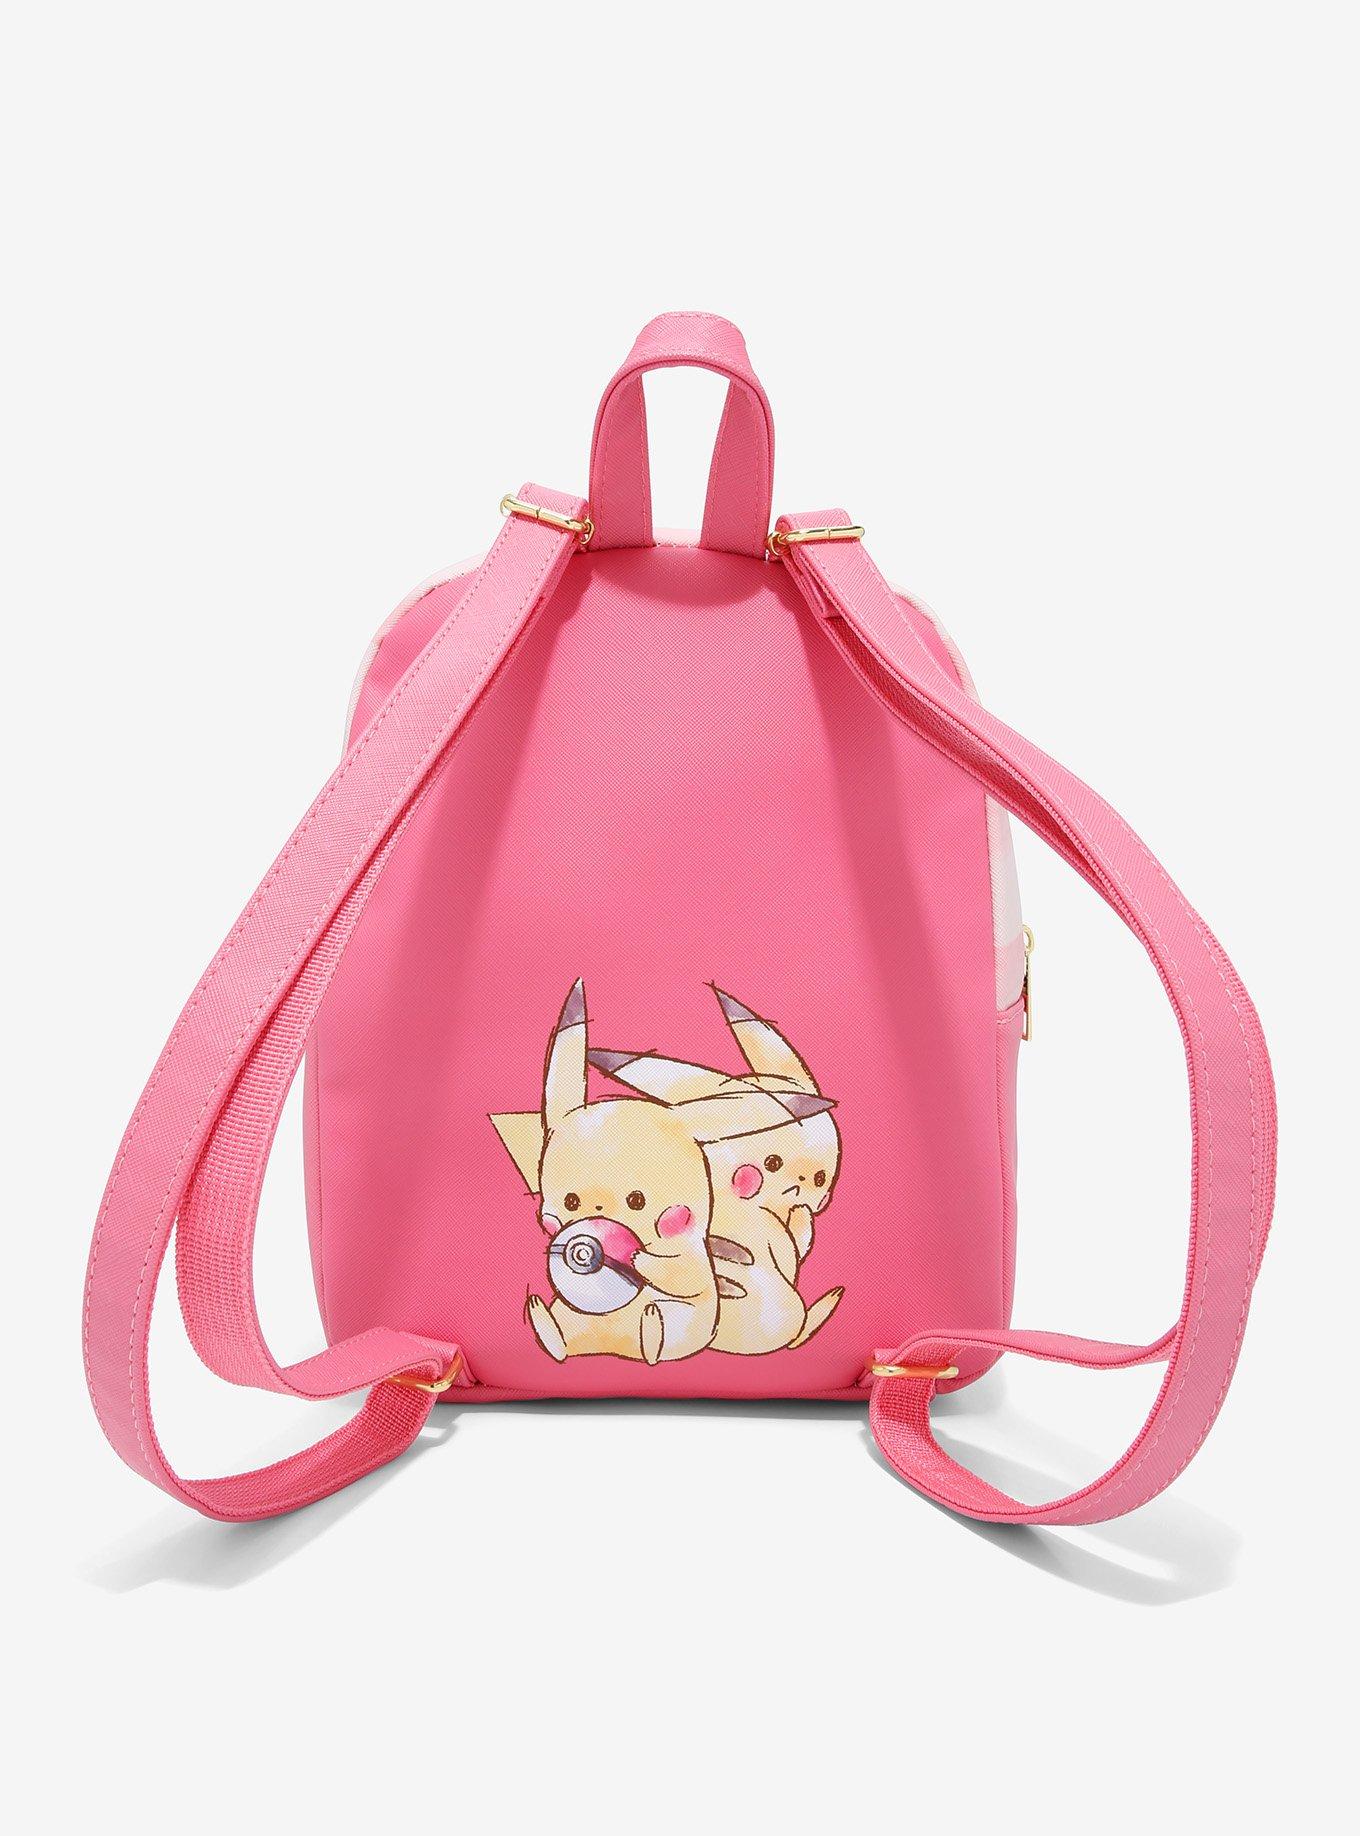 Pokemon Pikachu Love Mini Backpack